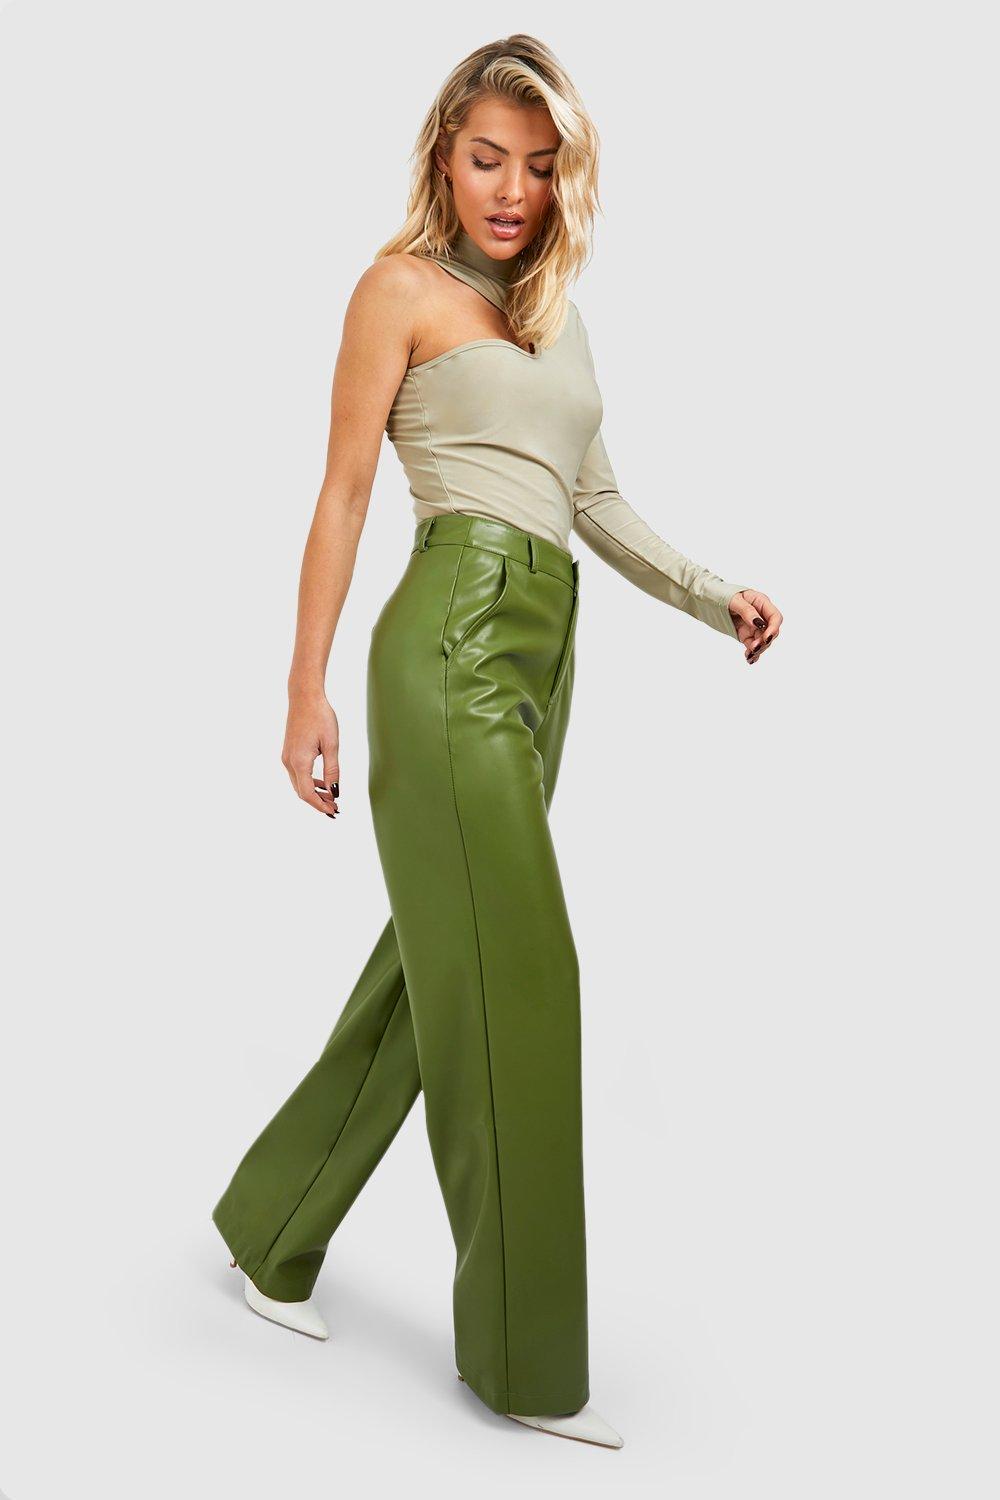 Express Body Contour Faux Leather Corset Crop Top Green Women's XL